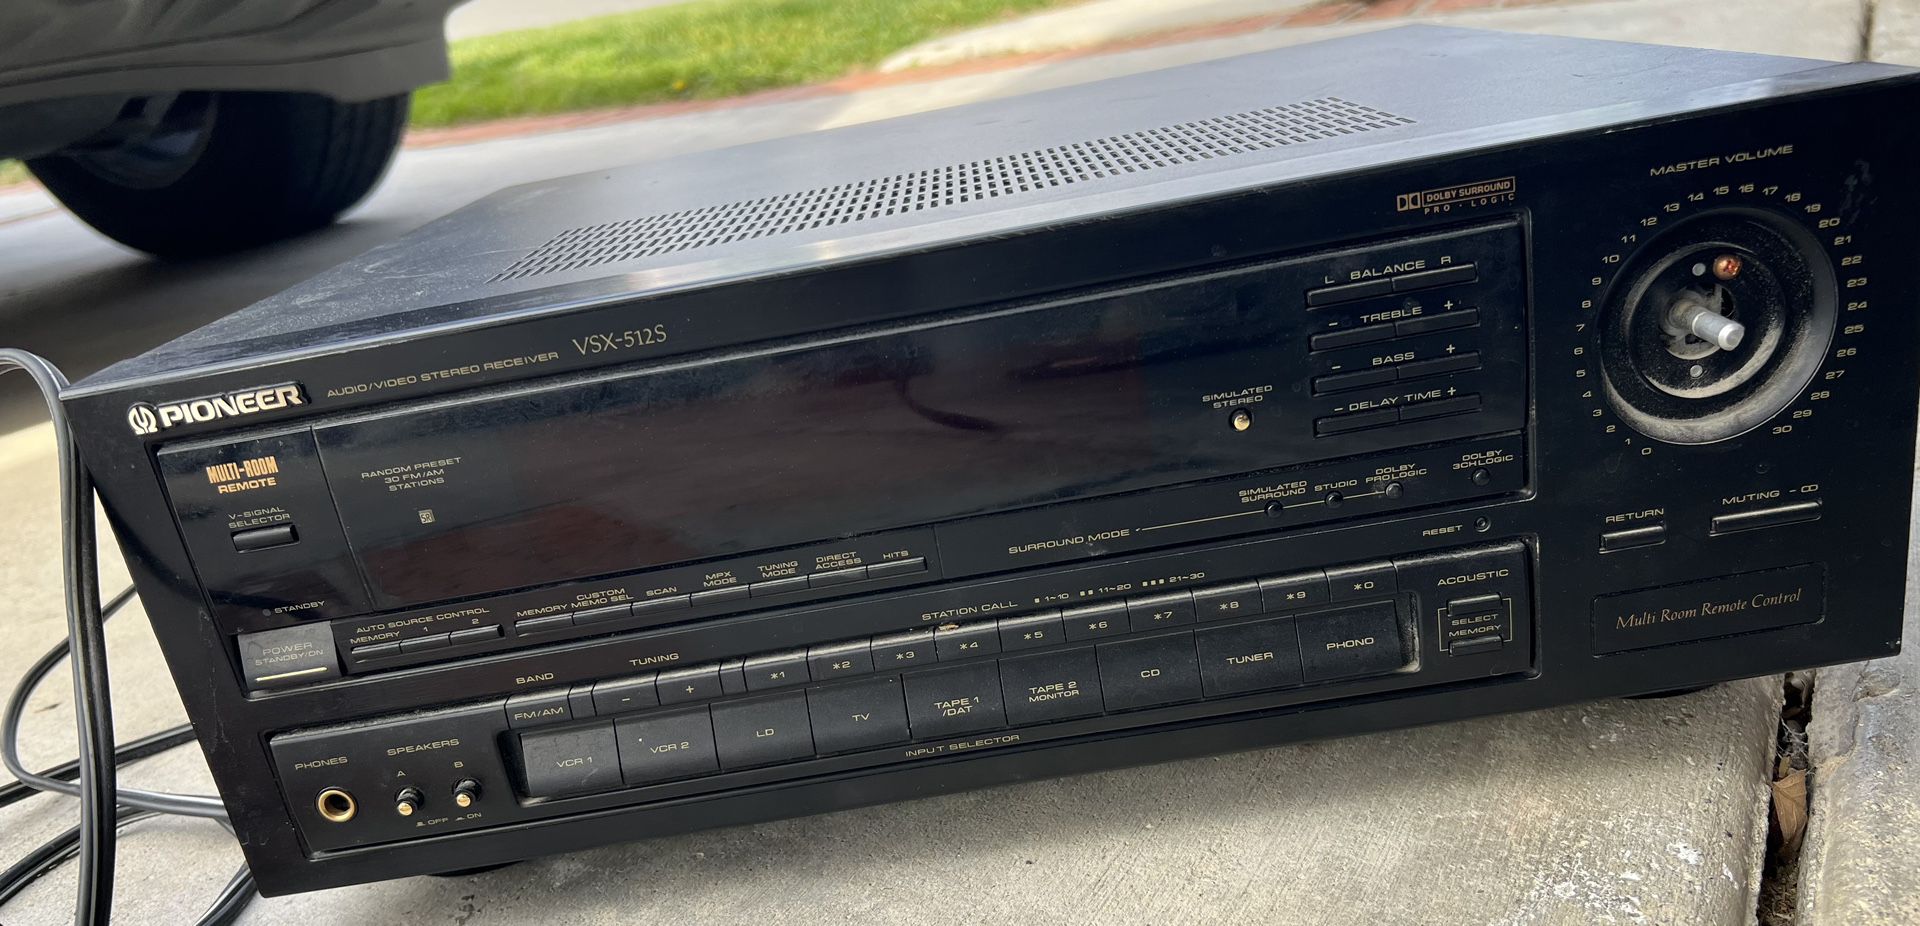 Pioneer Audio Video Receiver $75 